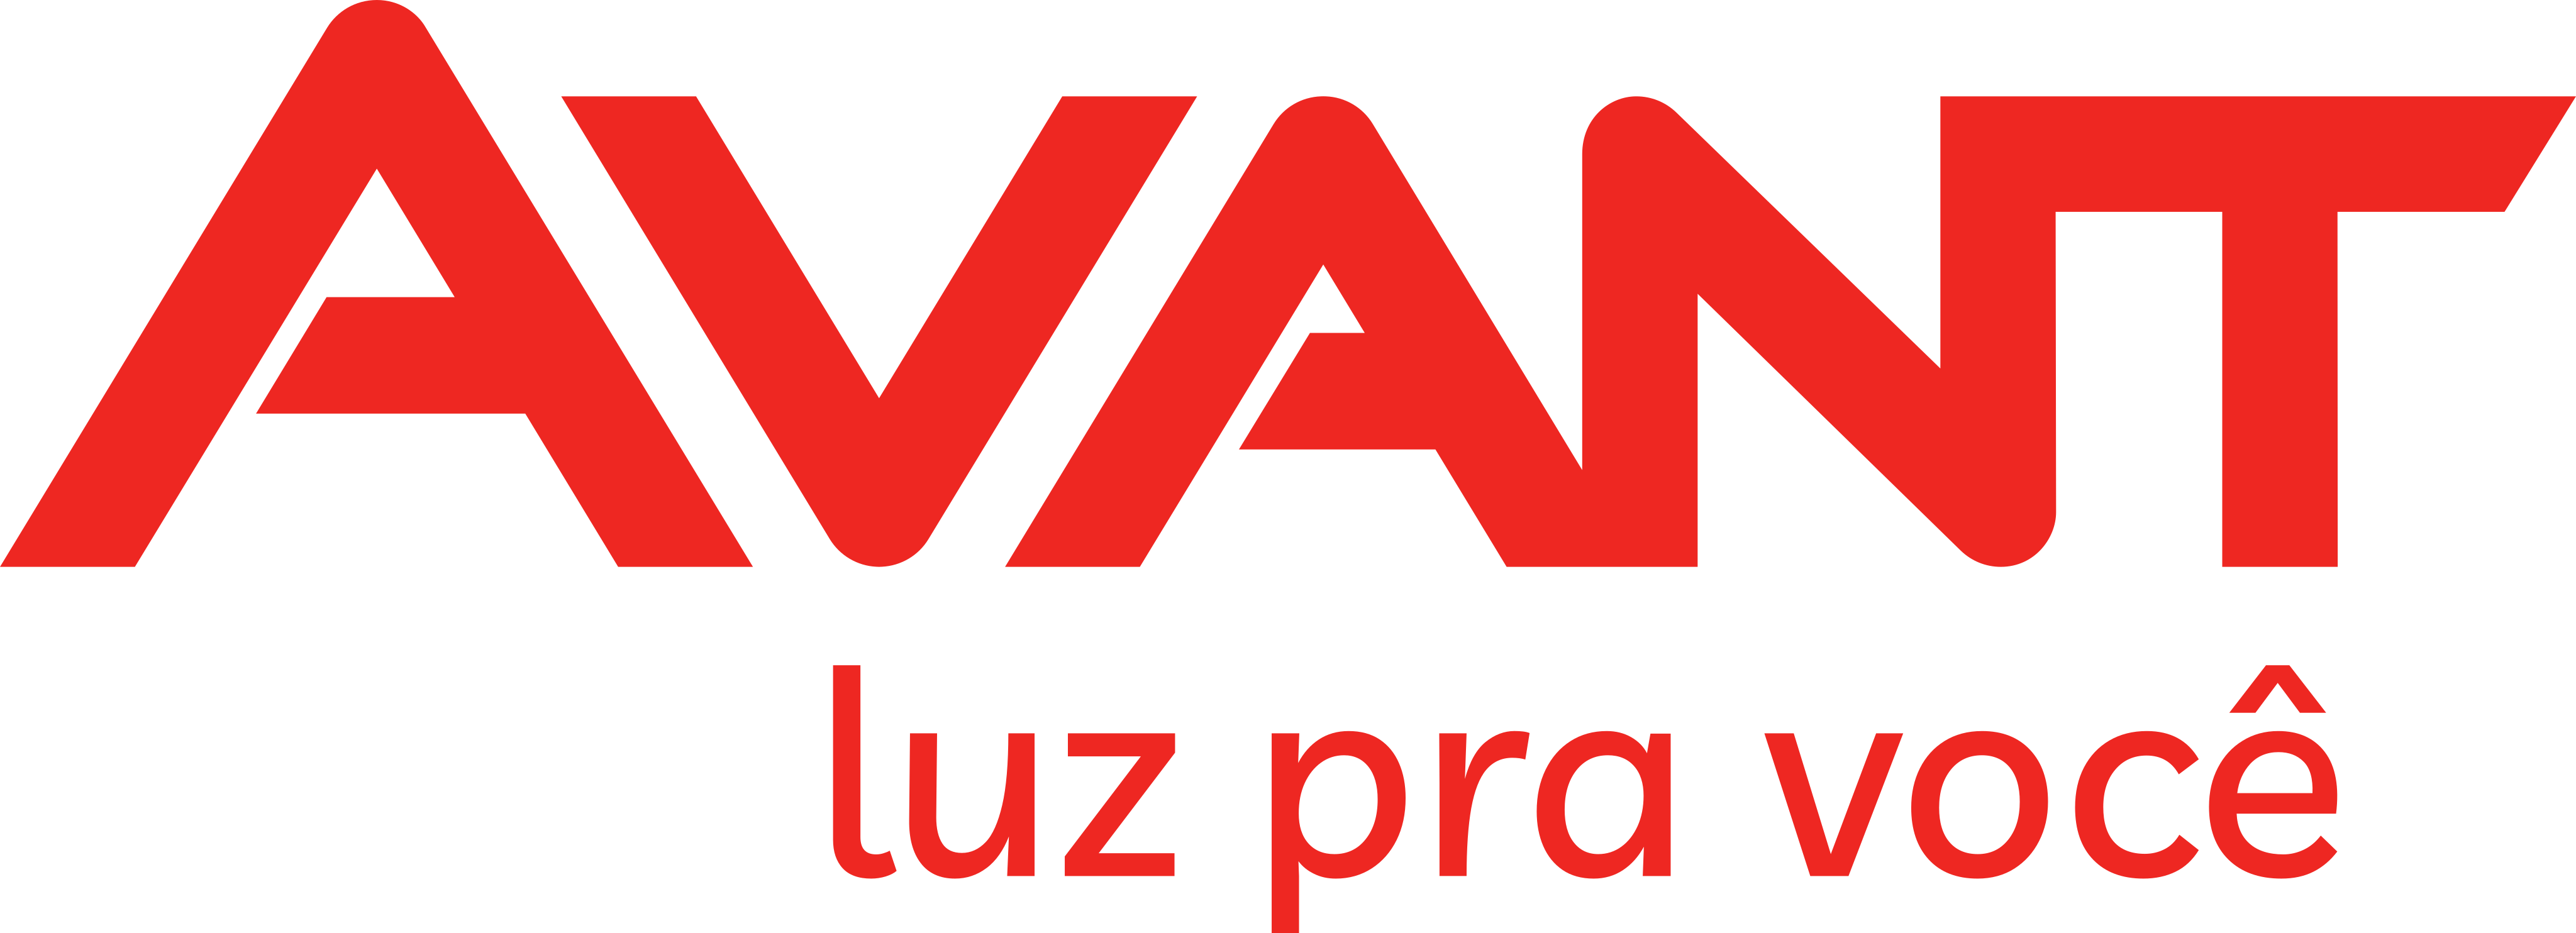 avant logo - Avant Logo